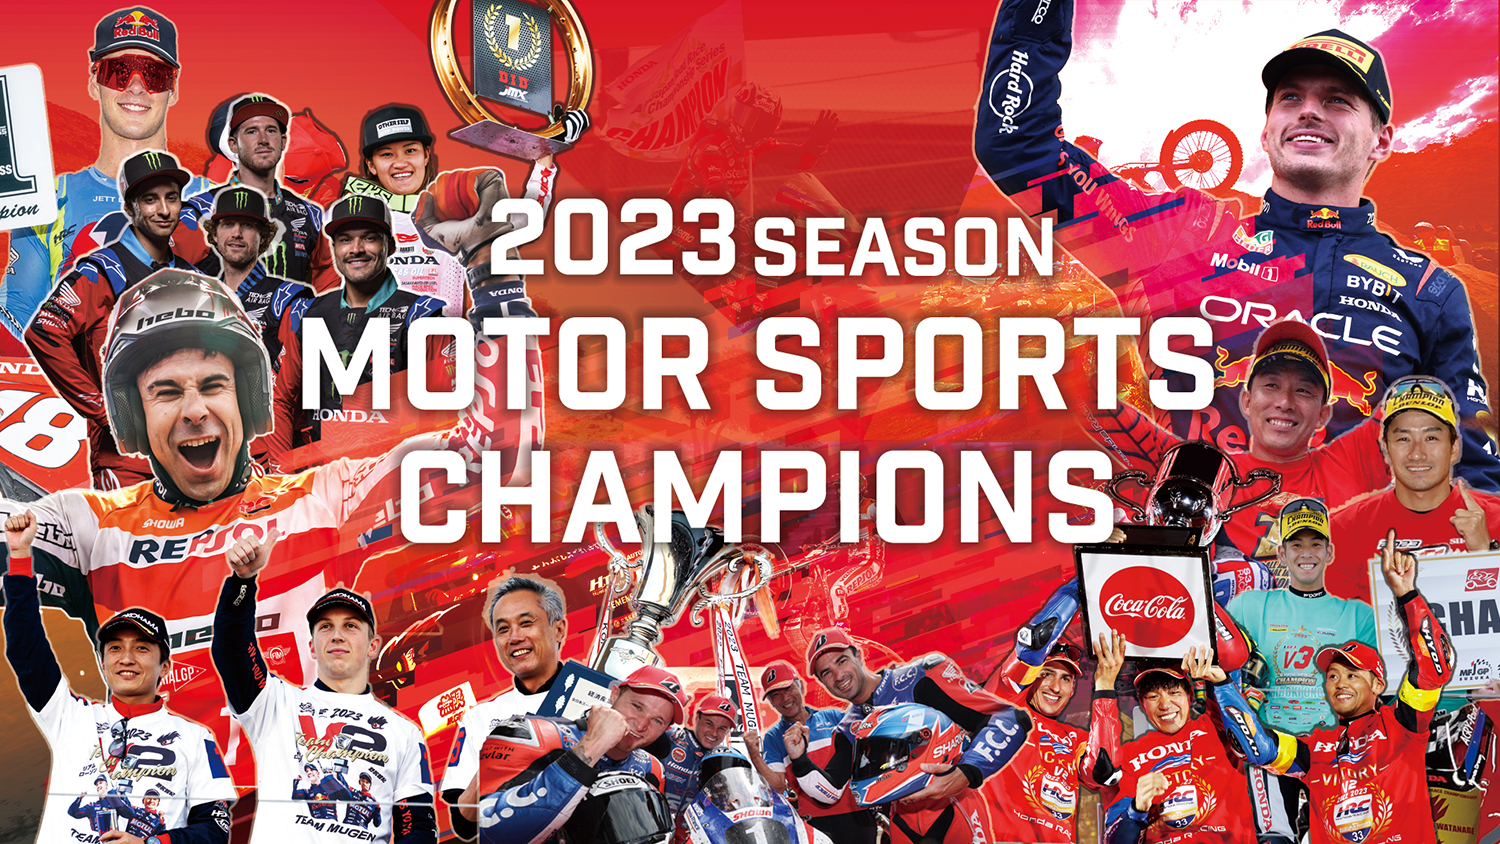 「Honda ウエルカムプラザ青山」にて「2023 SEASON MOTOR SPORTS CHAMPIONS」が開催中 〜 画像1